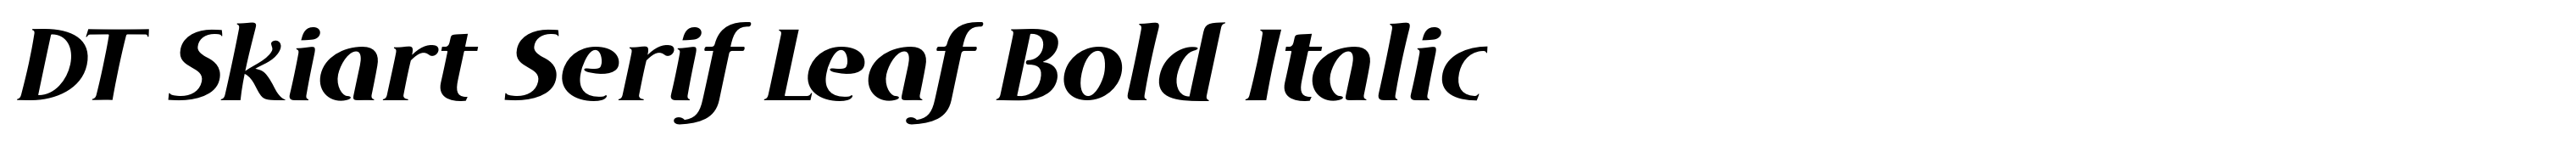 DT Skiart Serif Leaf Bold Italic